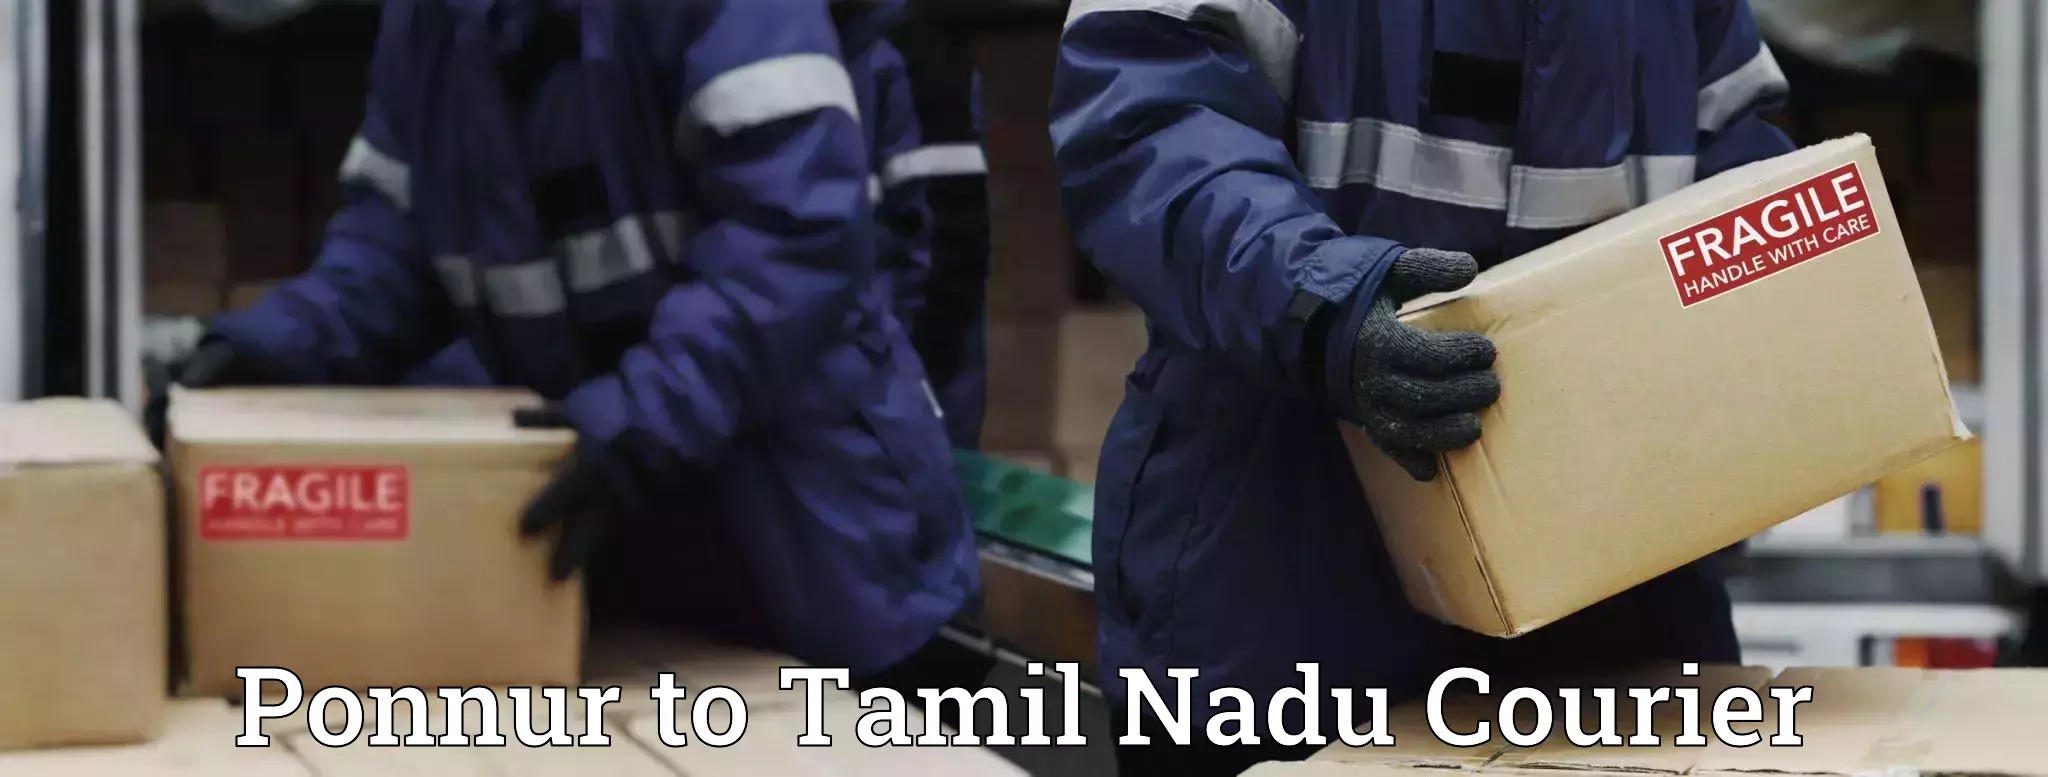 Courier service comparison Ponnur to Tamil Nadu